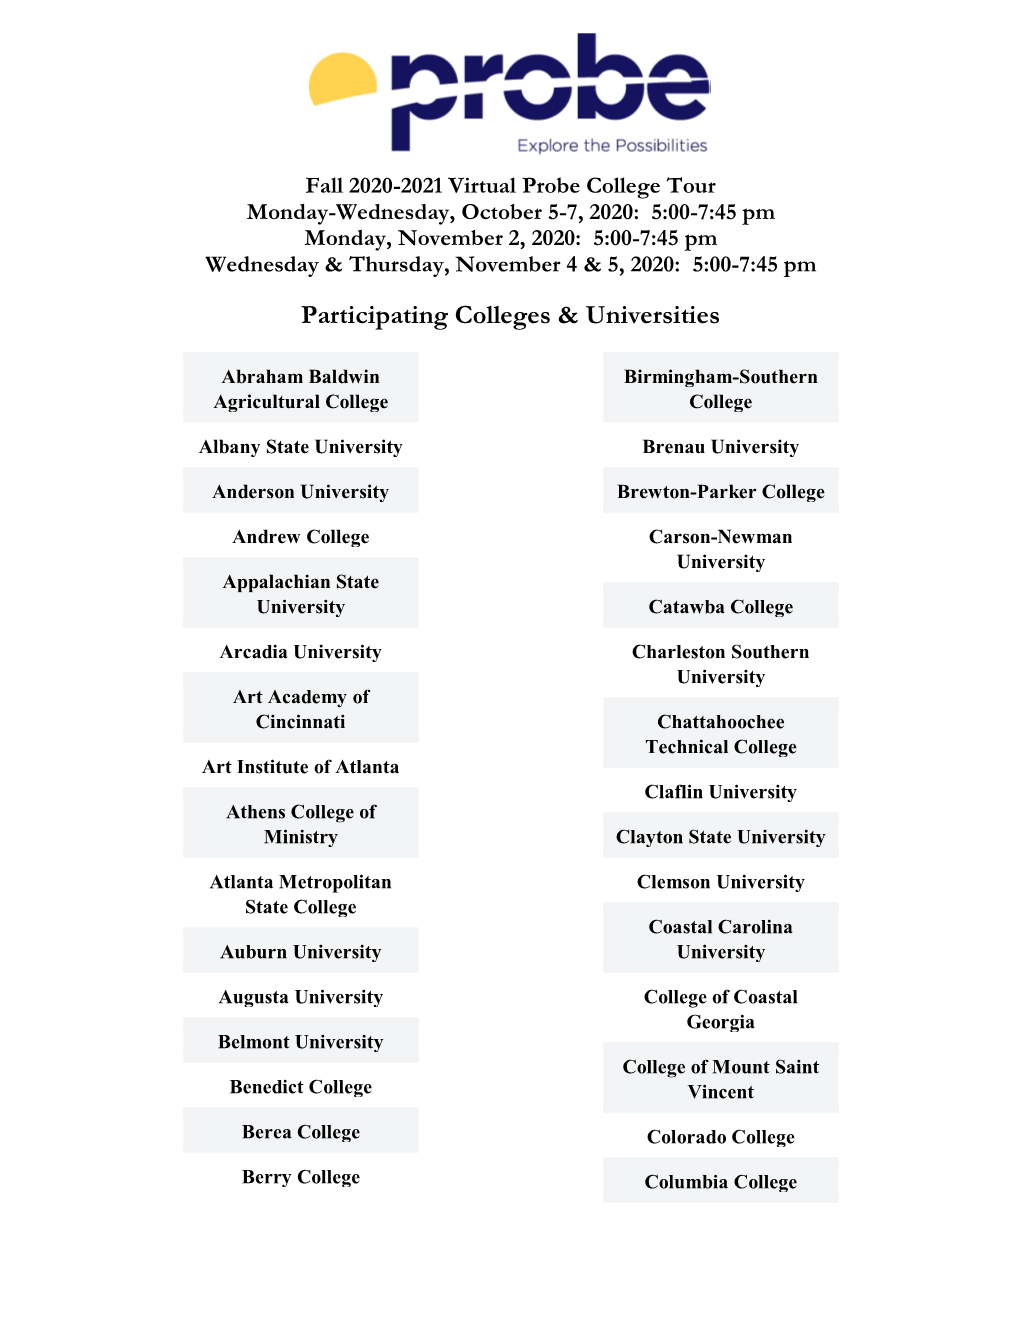 Participating Colleges & Universities